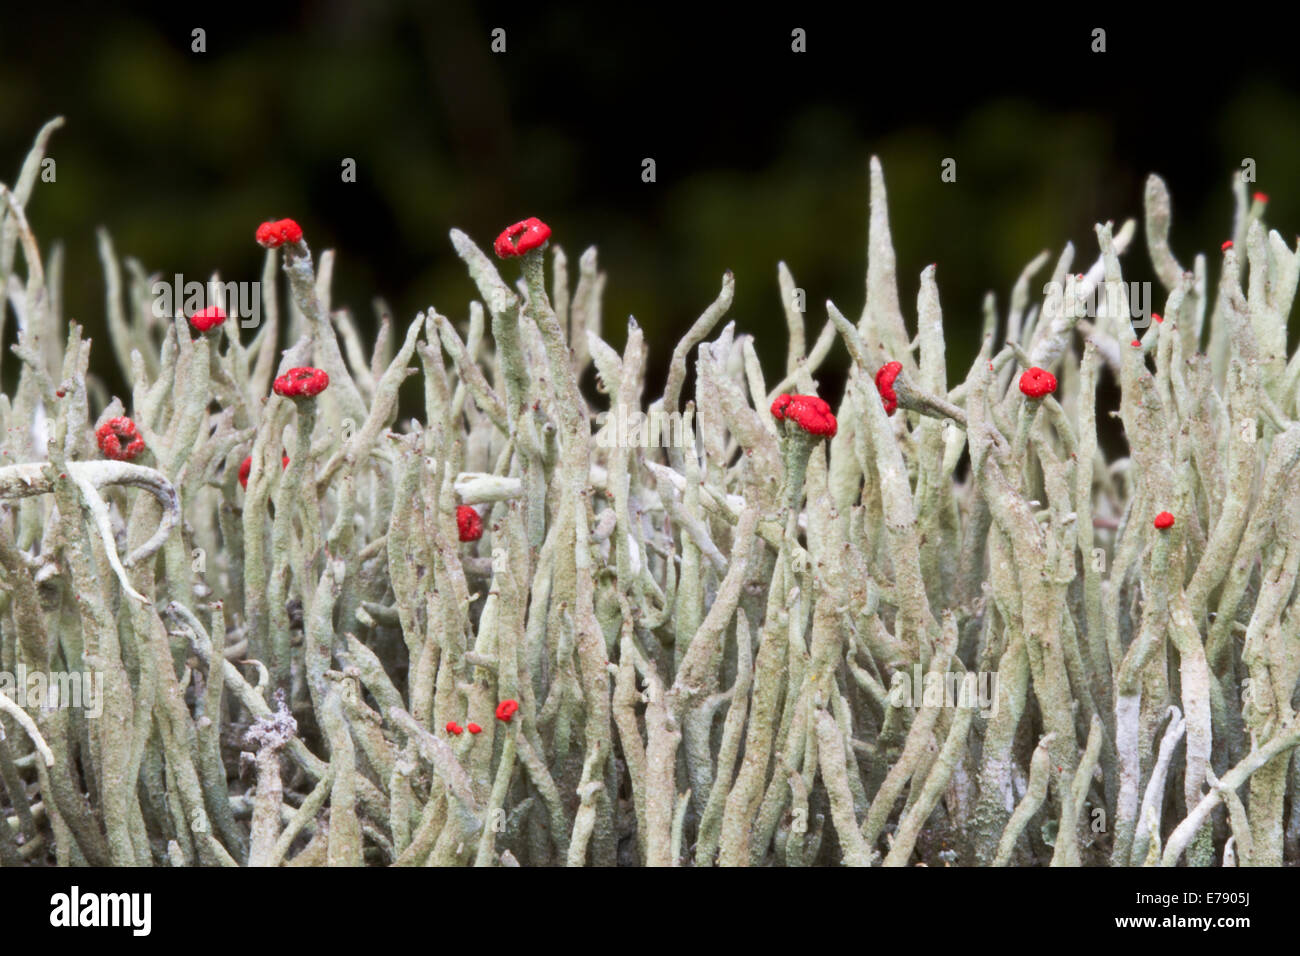 Lipstick Cladonia (Cladonia macilenta) with red fruiting bodies Stock Photo